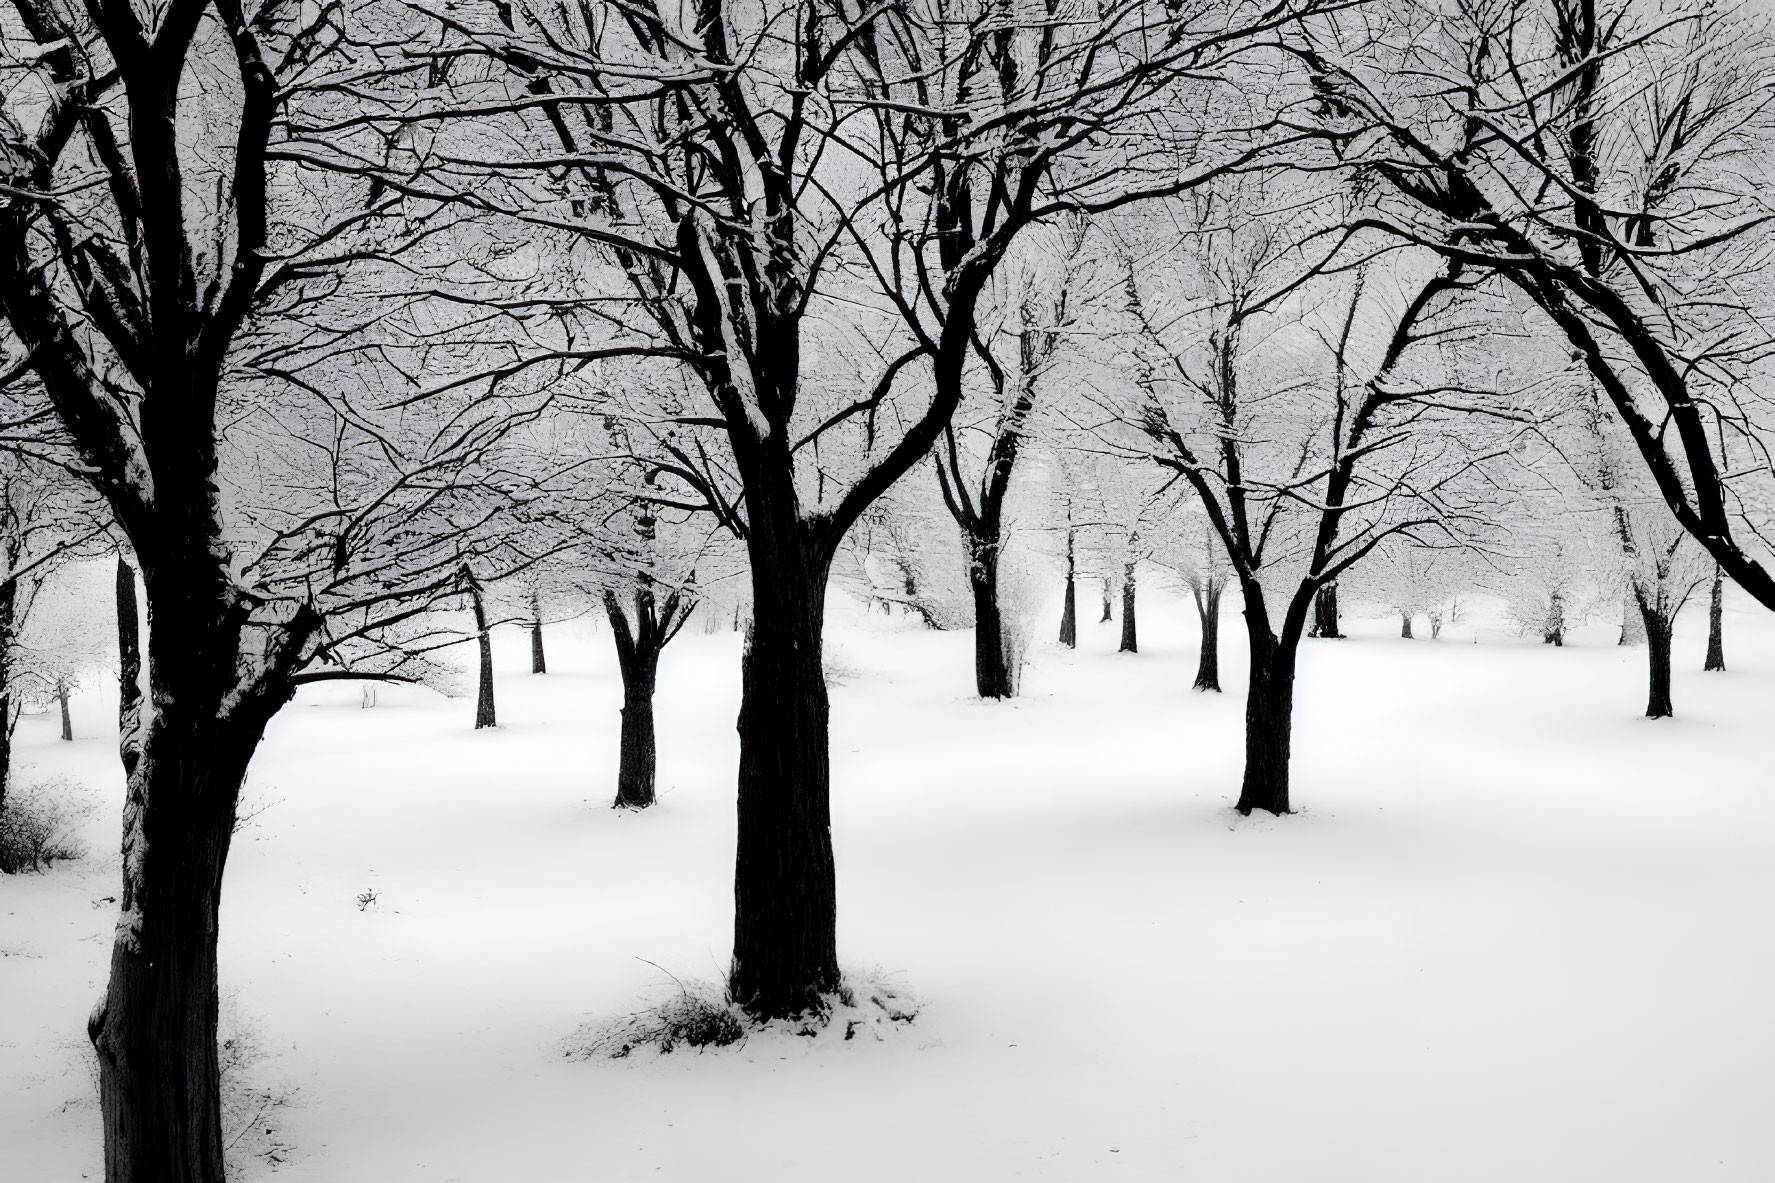 Winter Scene: Snowy Landscape with Bare Trees